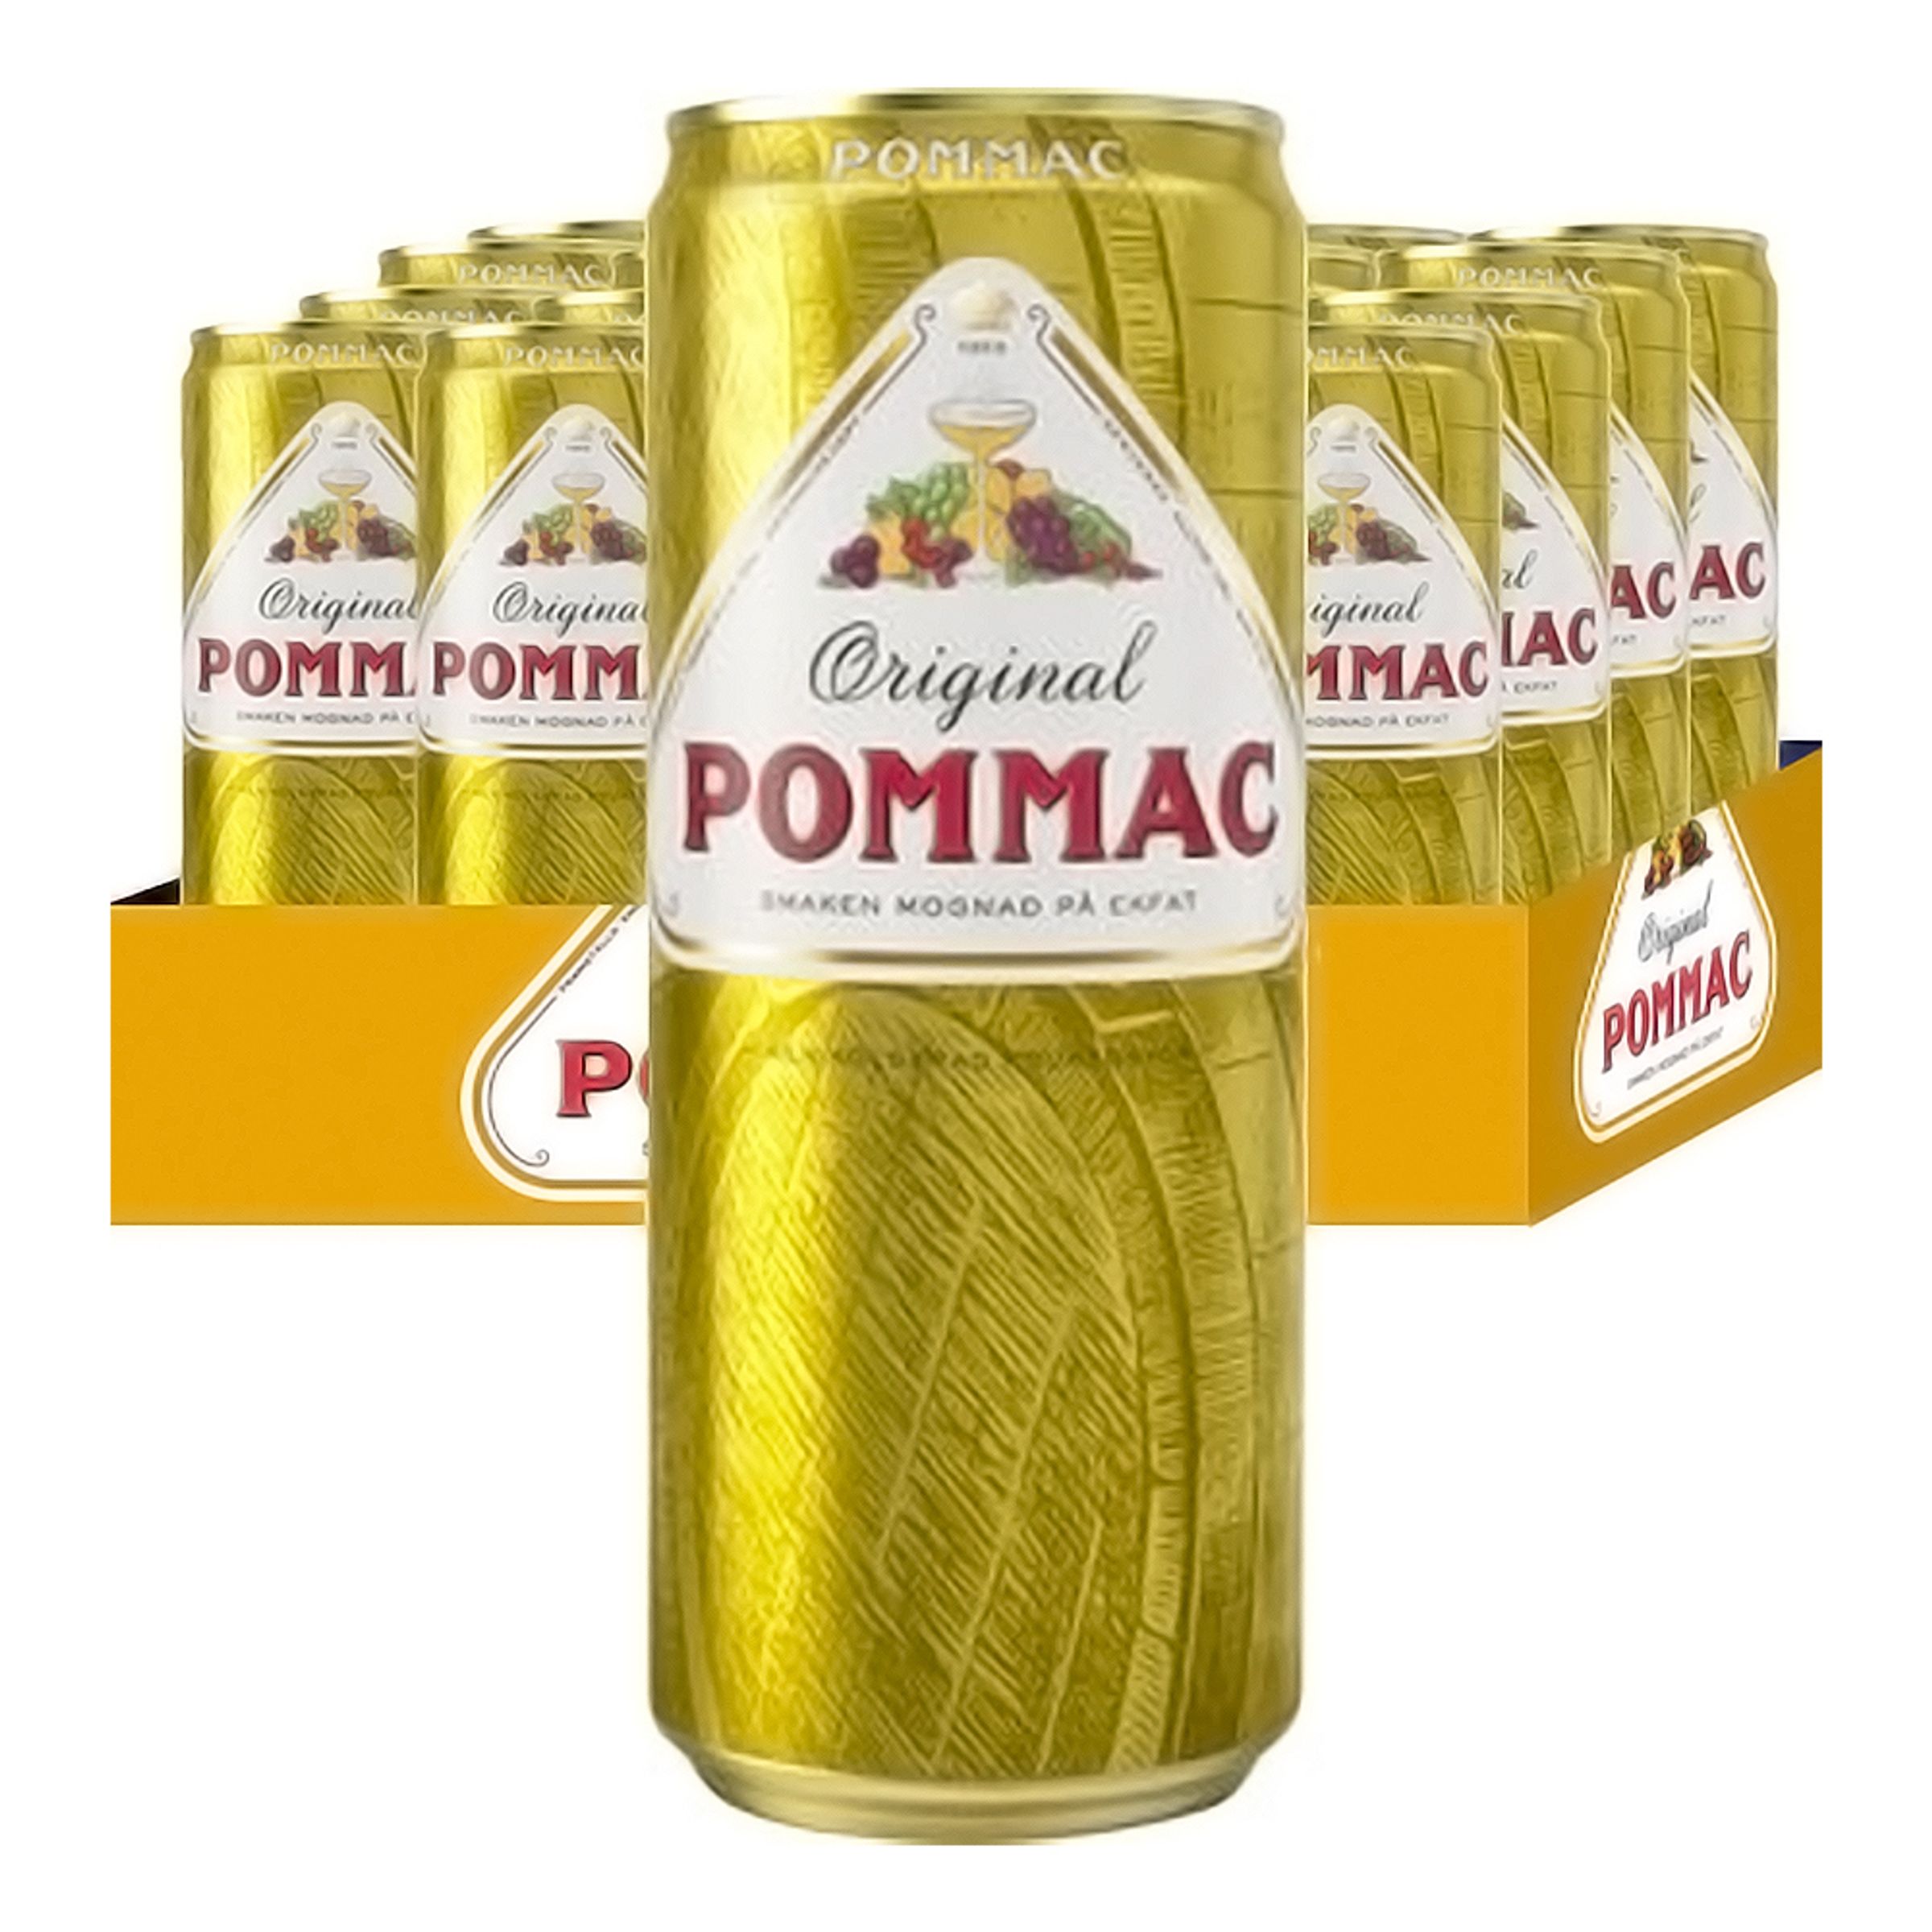 Pommac Original - 1-pack